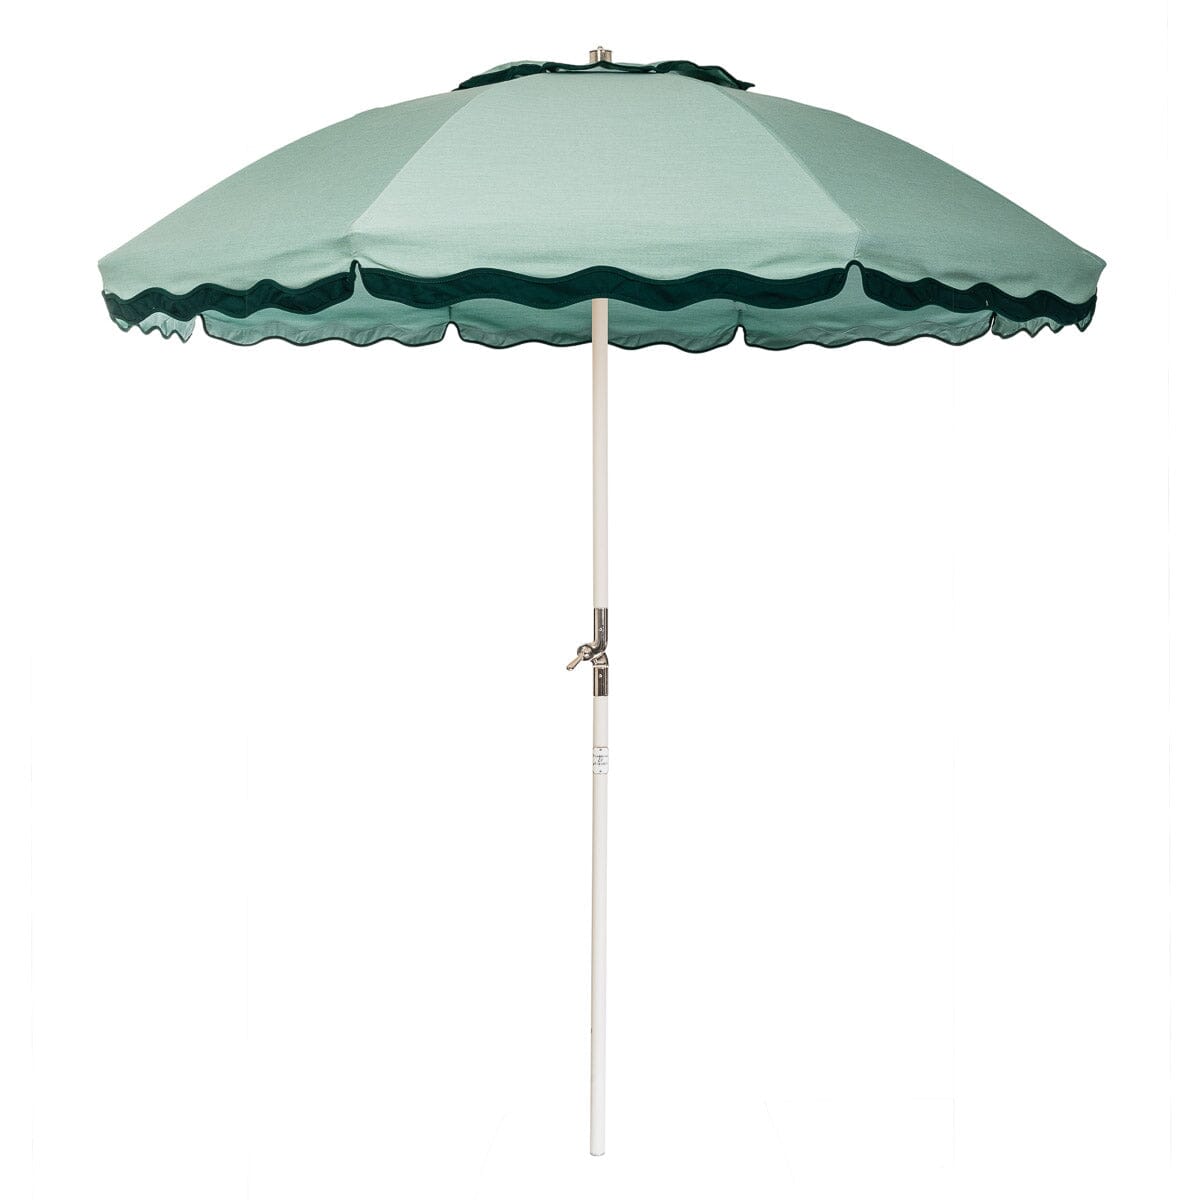 The Club Umbrella - Rivie Green Beach Club Umbrella Business & Pleasure Co Aus 